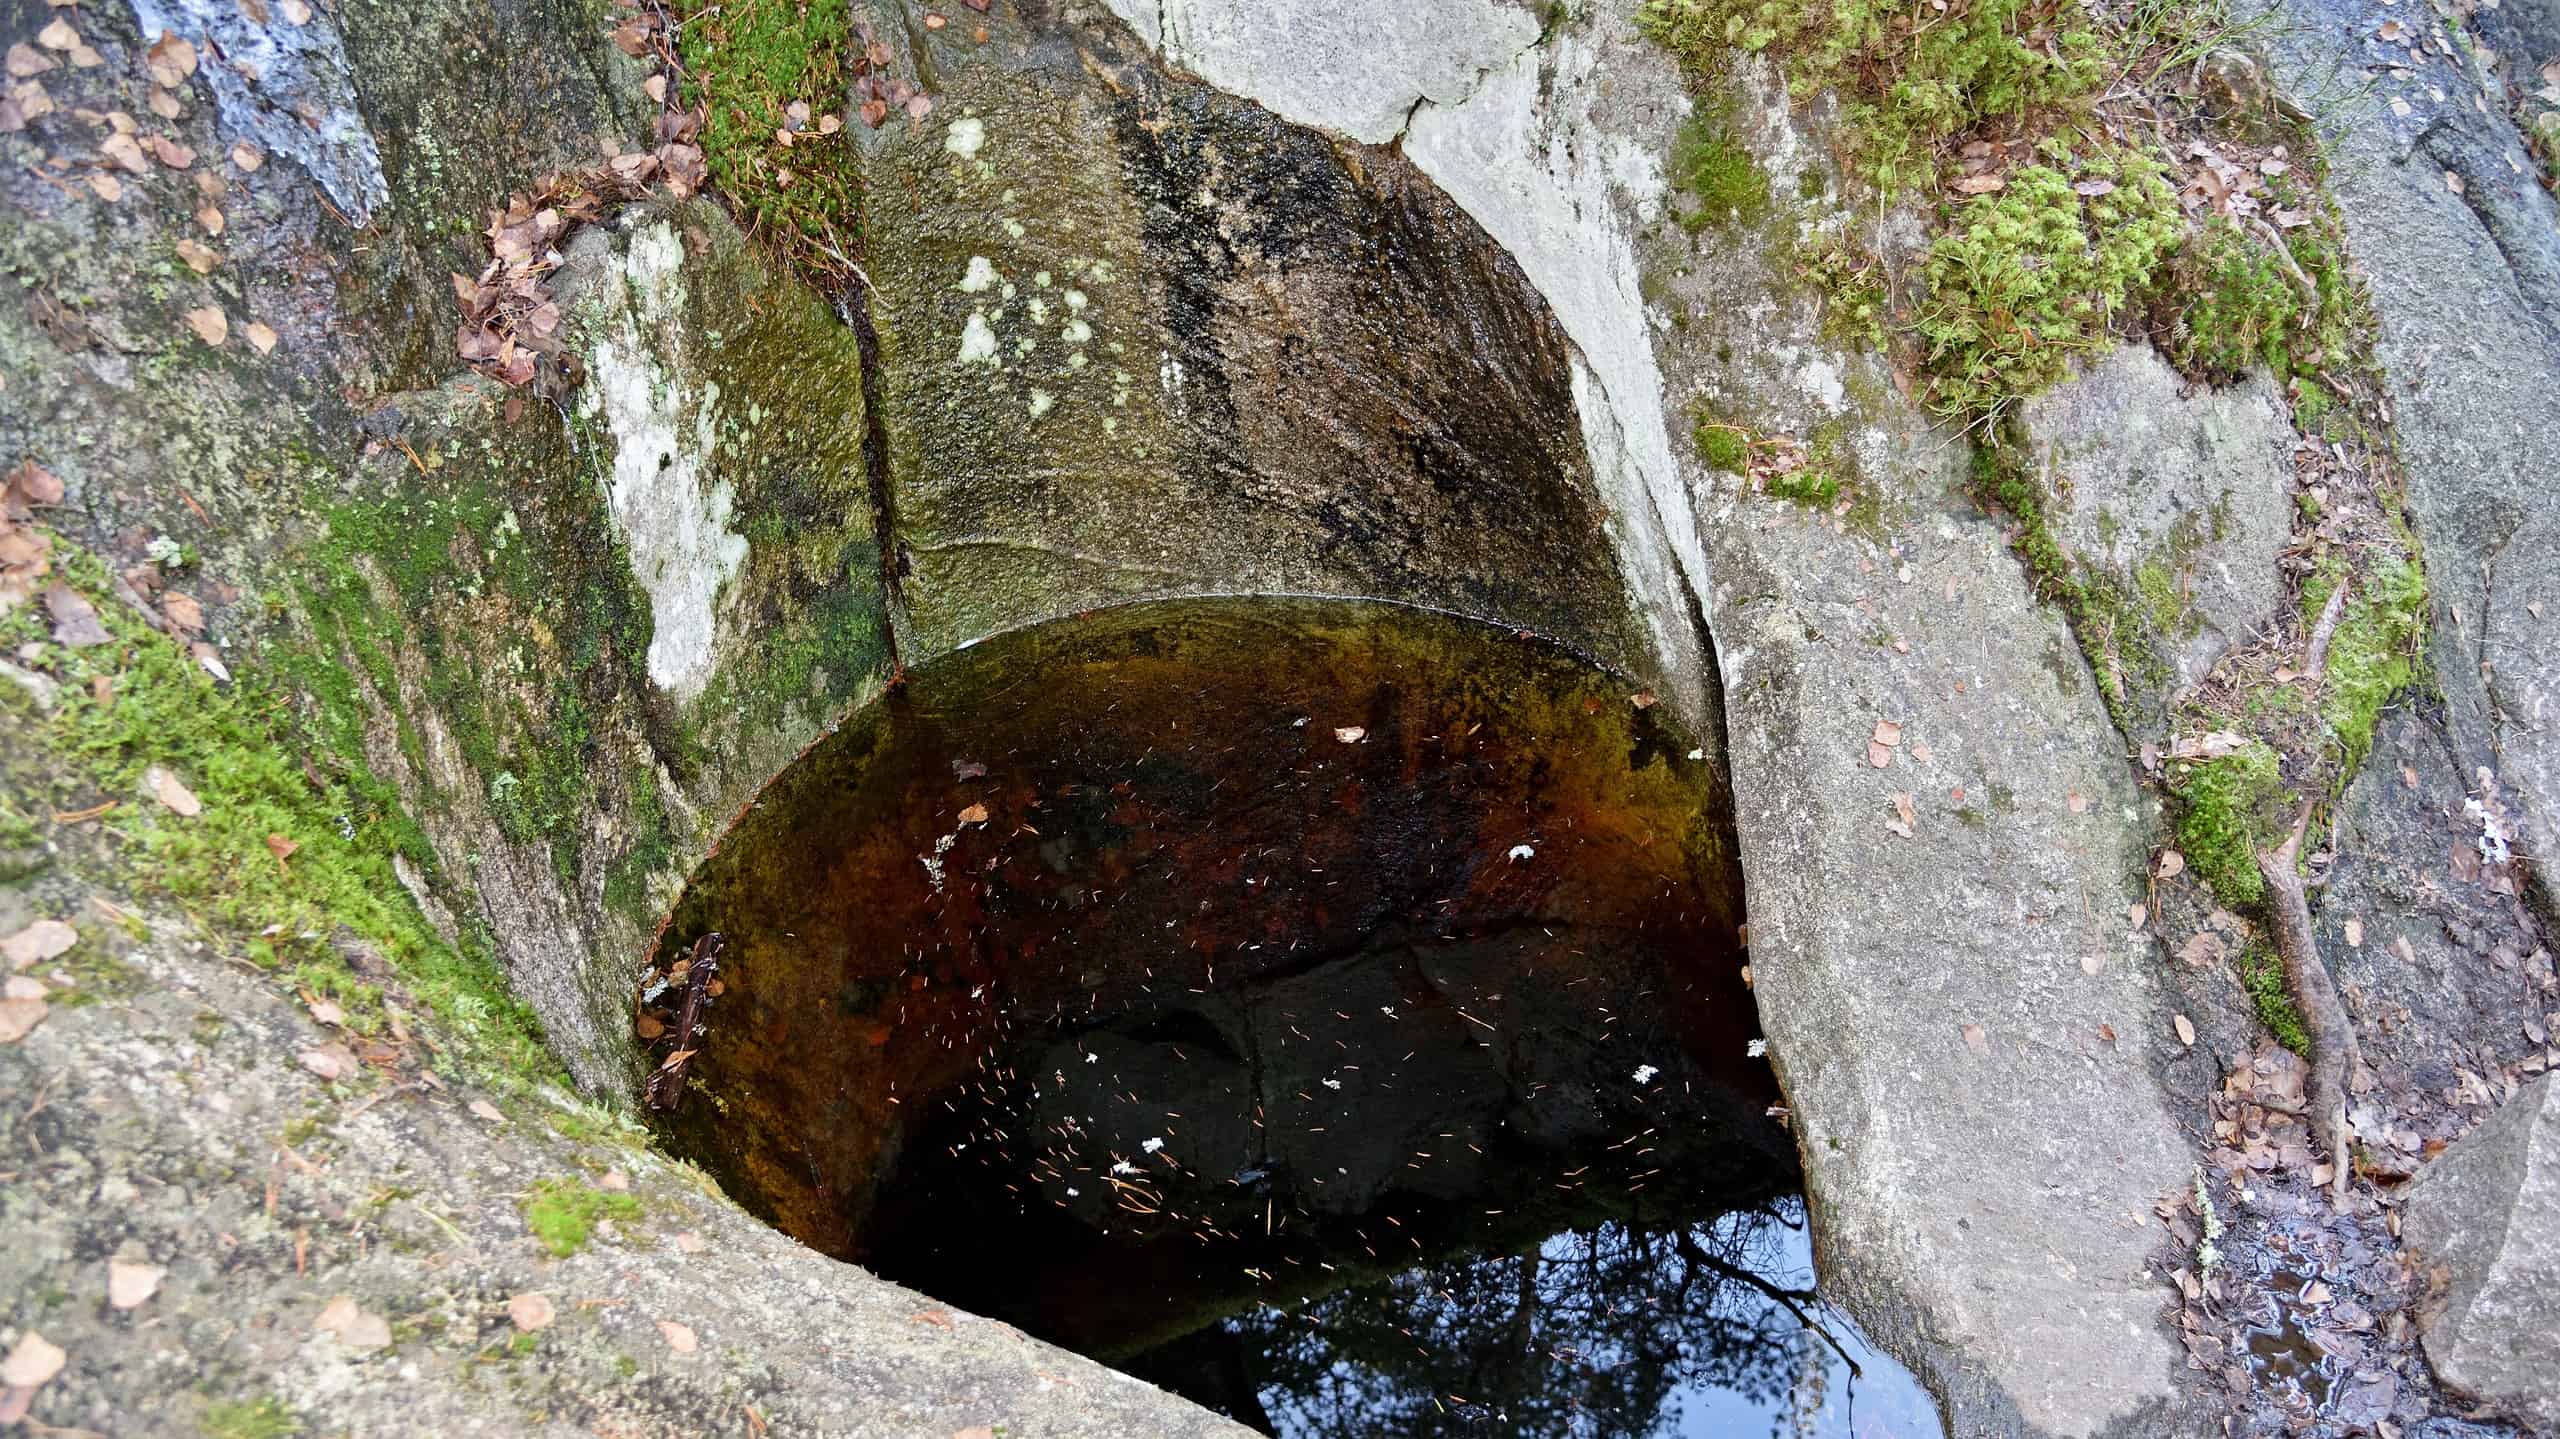 a giant's kettle formation in Tyresta national park, sweden